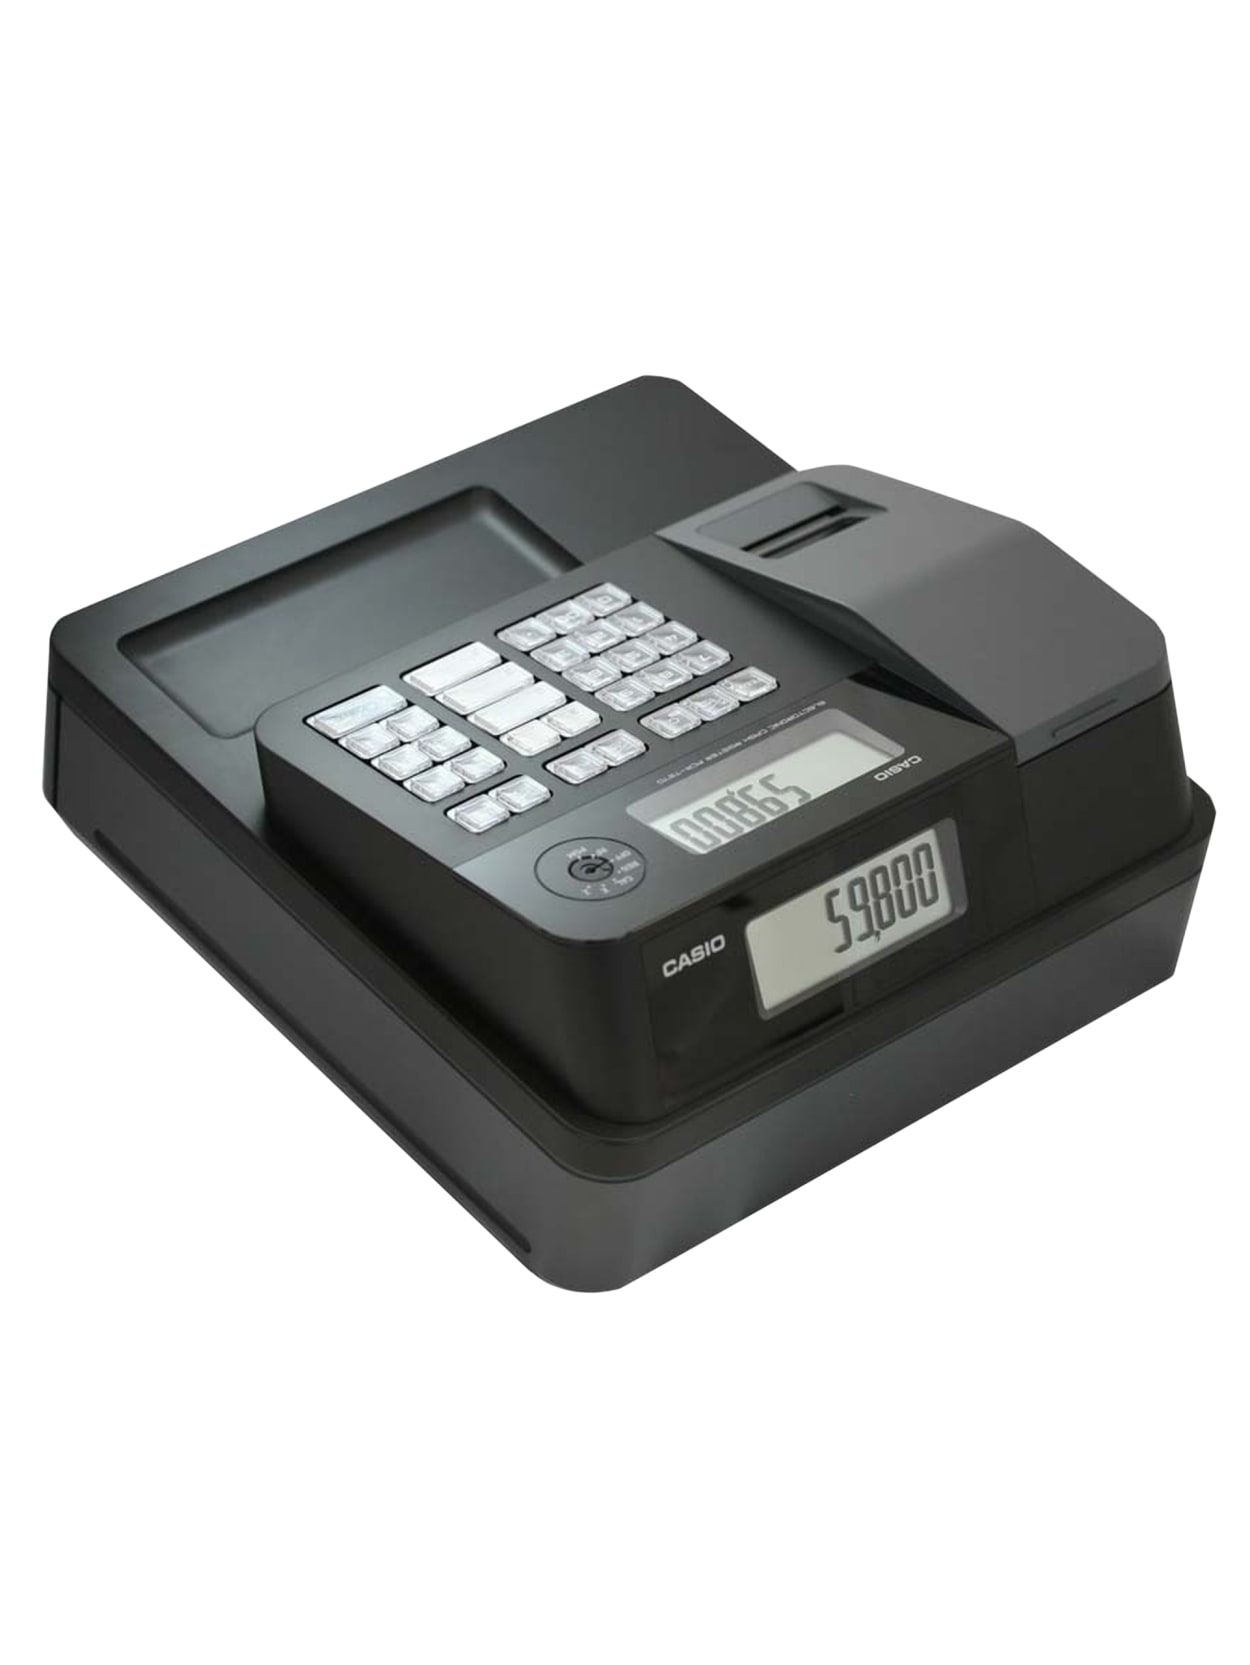 canon cash register machine